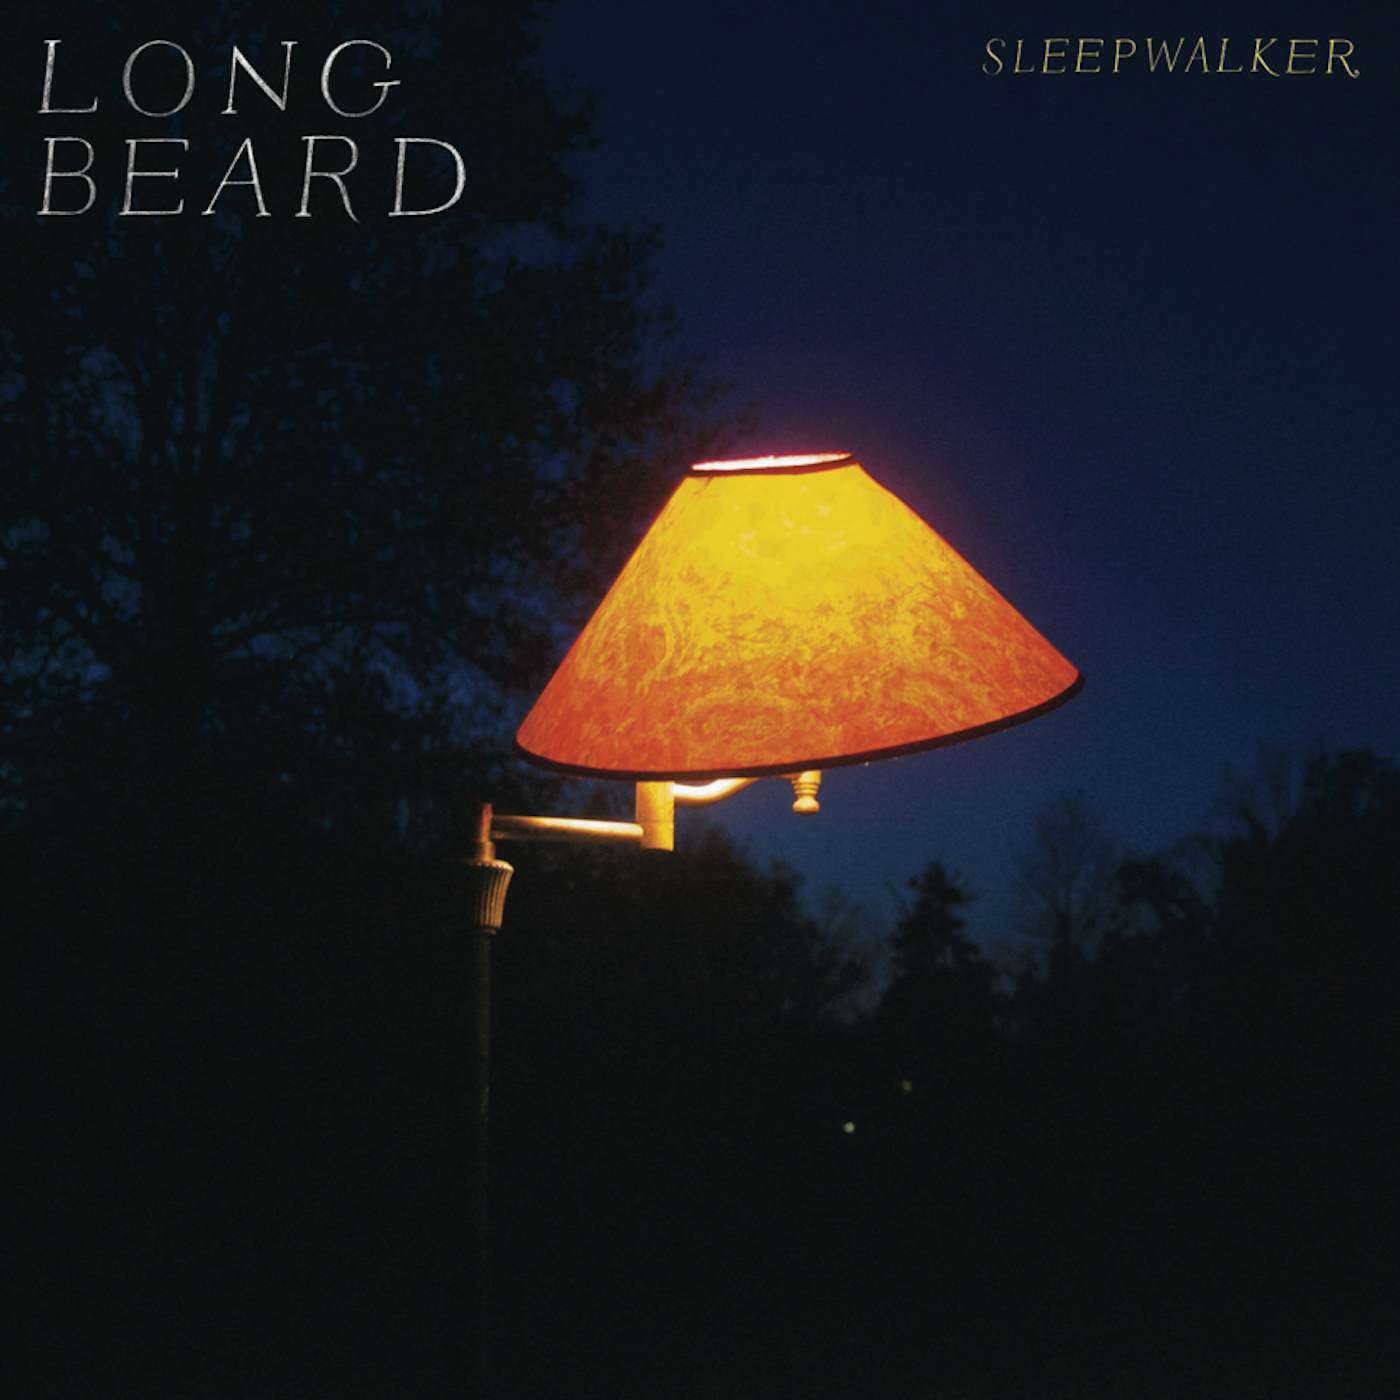 Long Beard Sleepwalker Vinyl Record